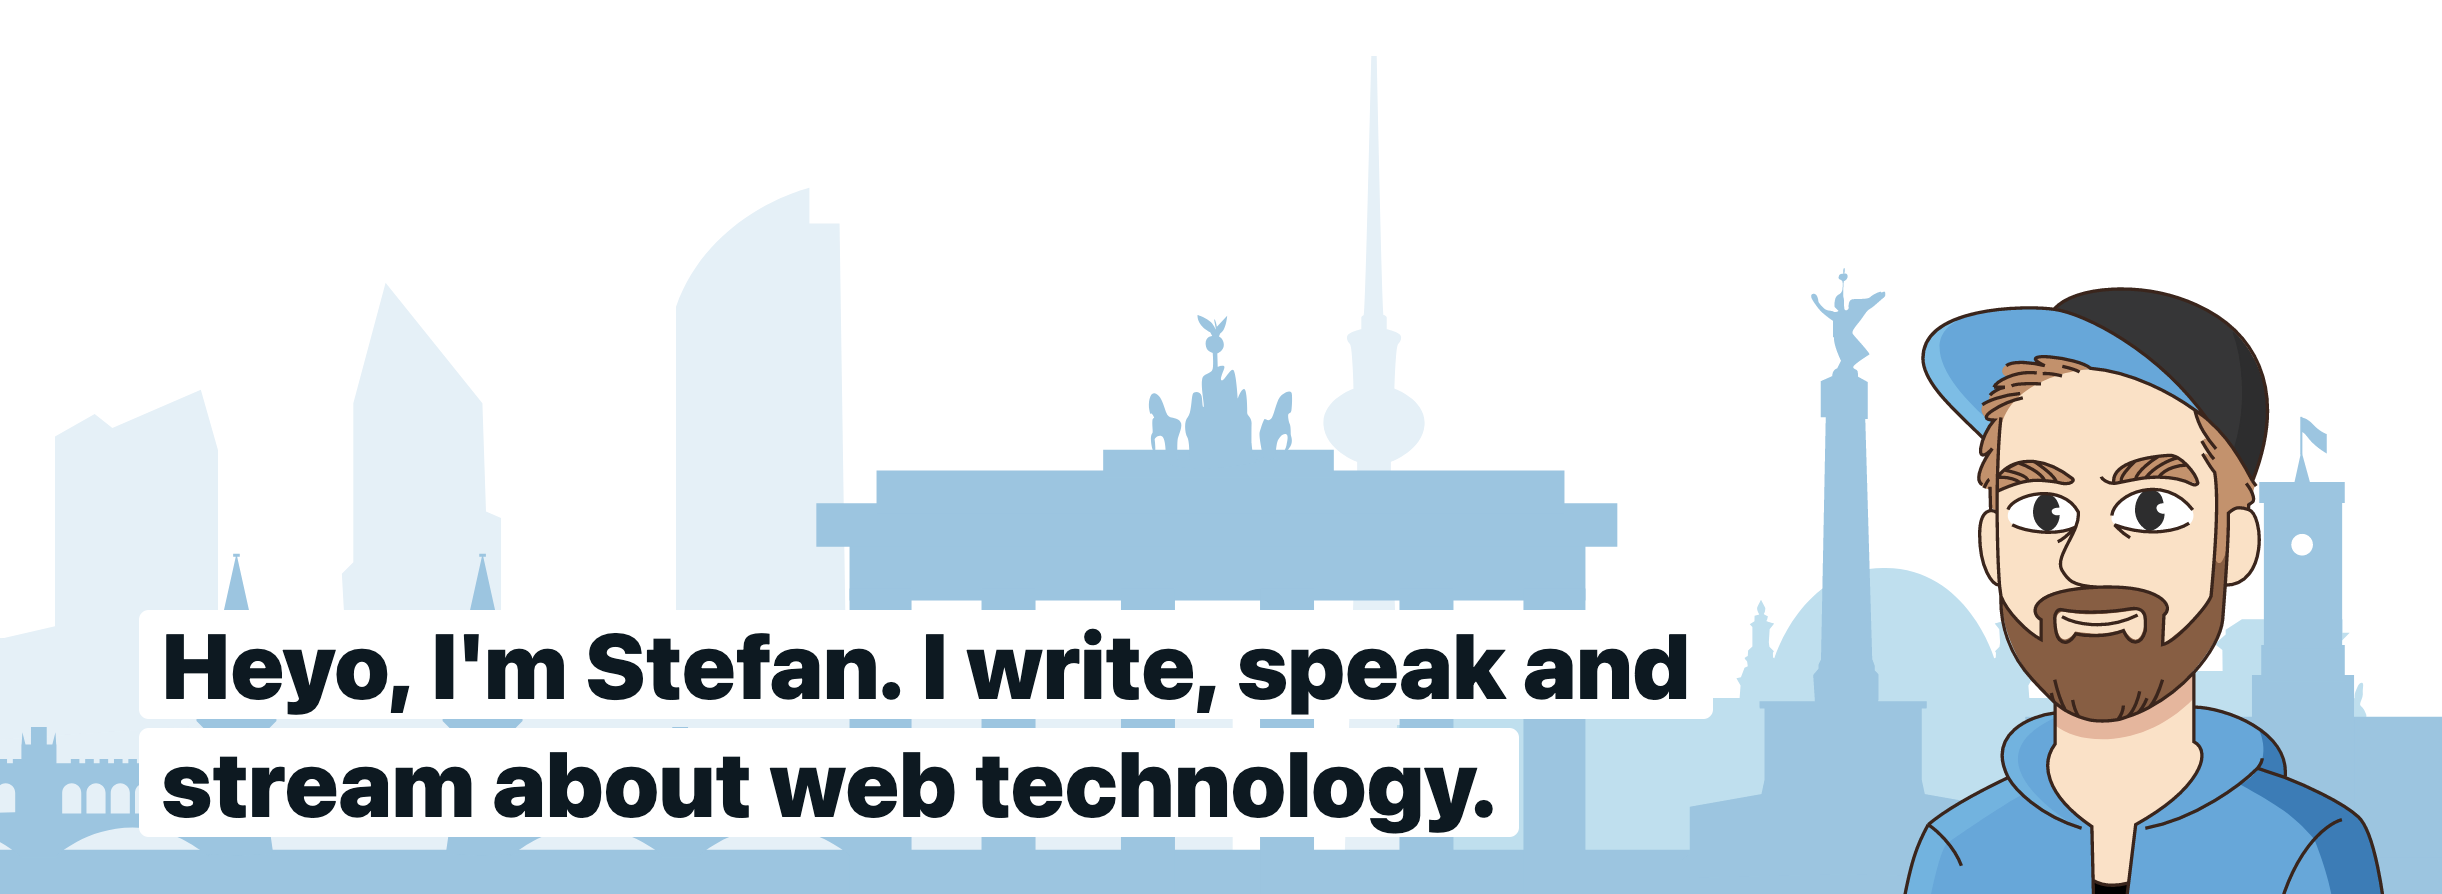 Heyo, I'm Stefan. I write and speak about web technology.